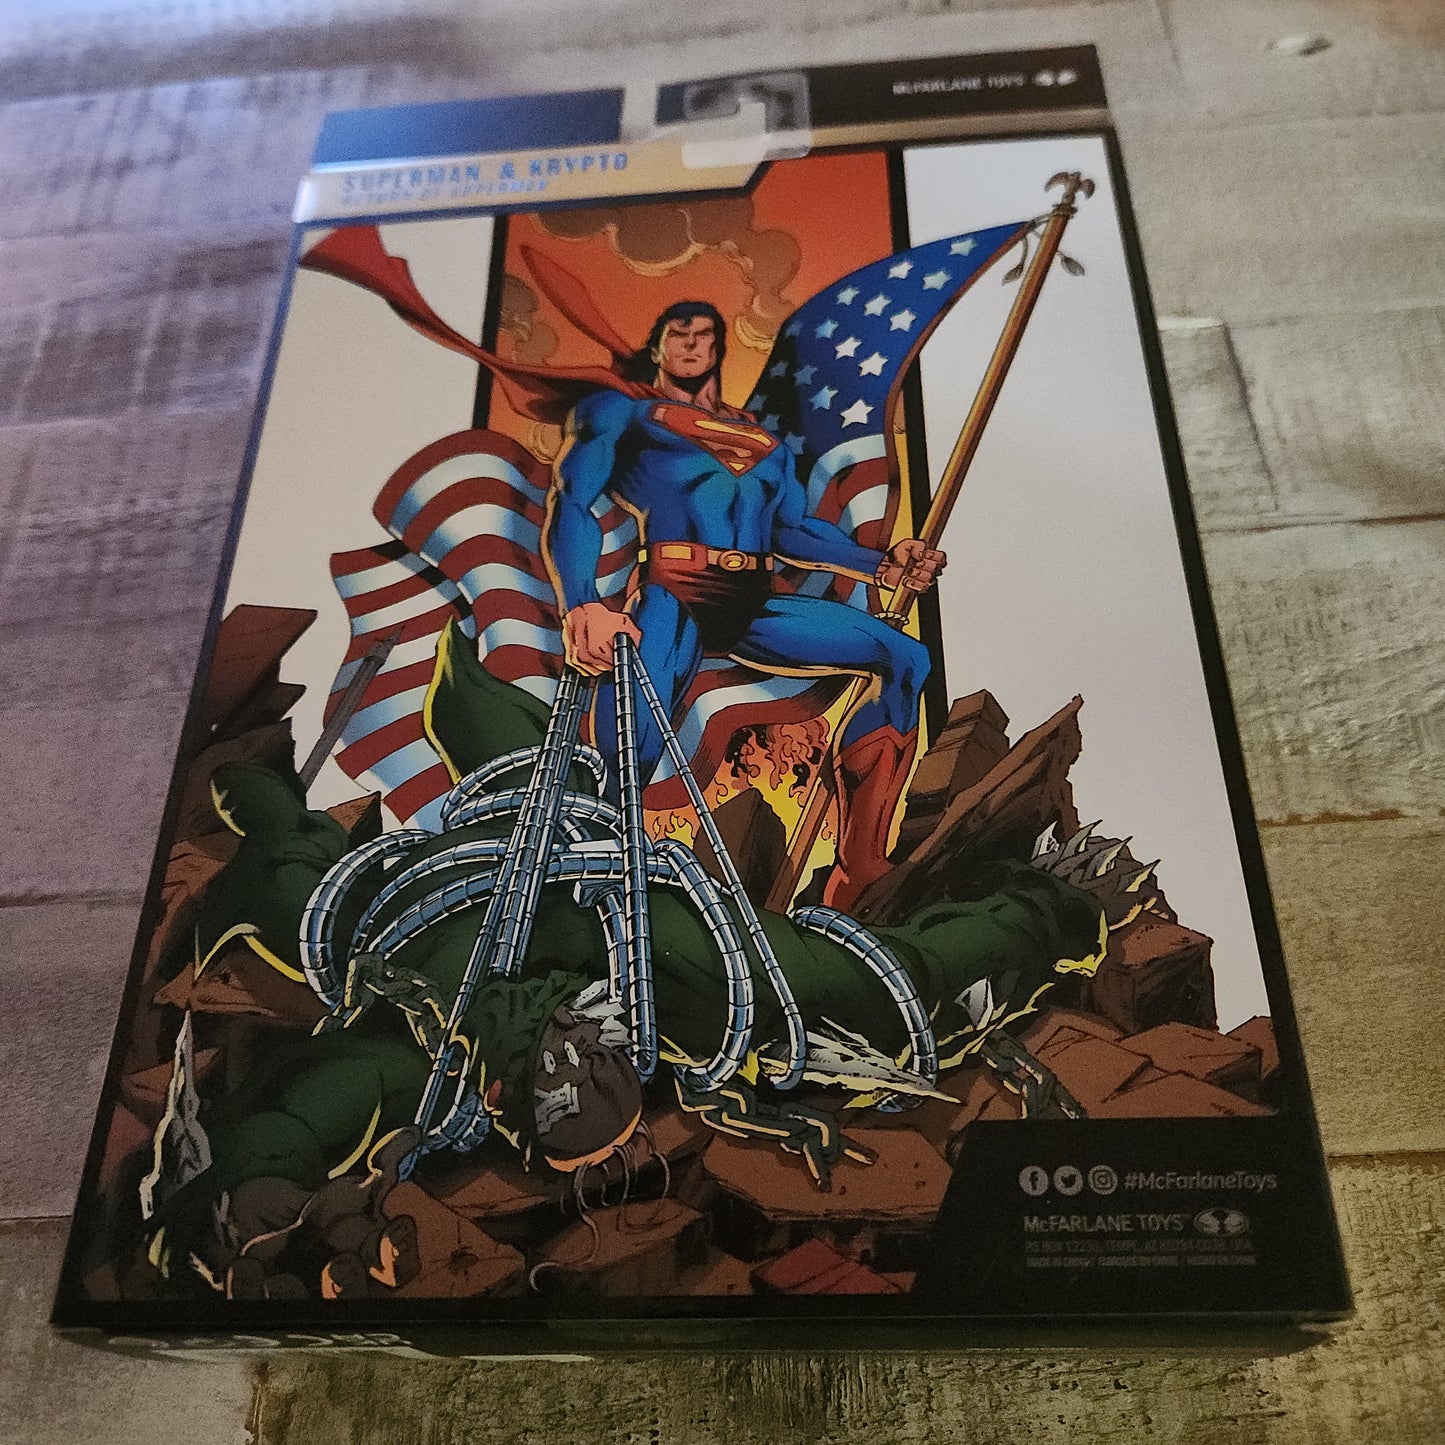 (.) DC Multiverse McFarlane Collector Edition PLATINUM Green Superman & Krypto Chase